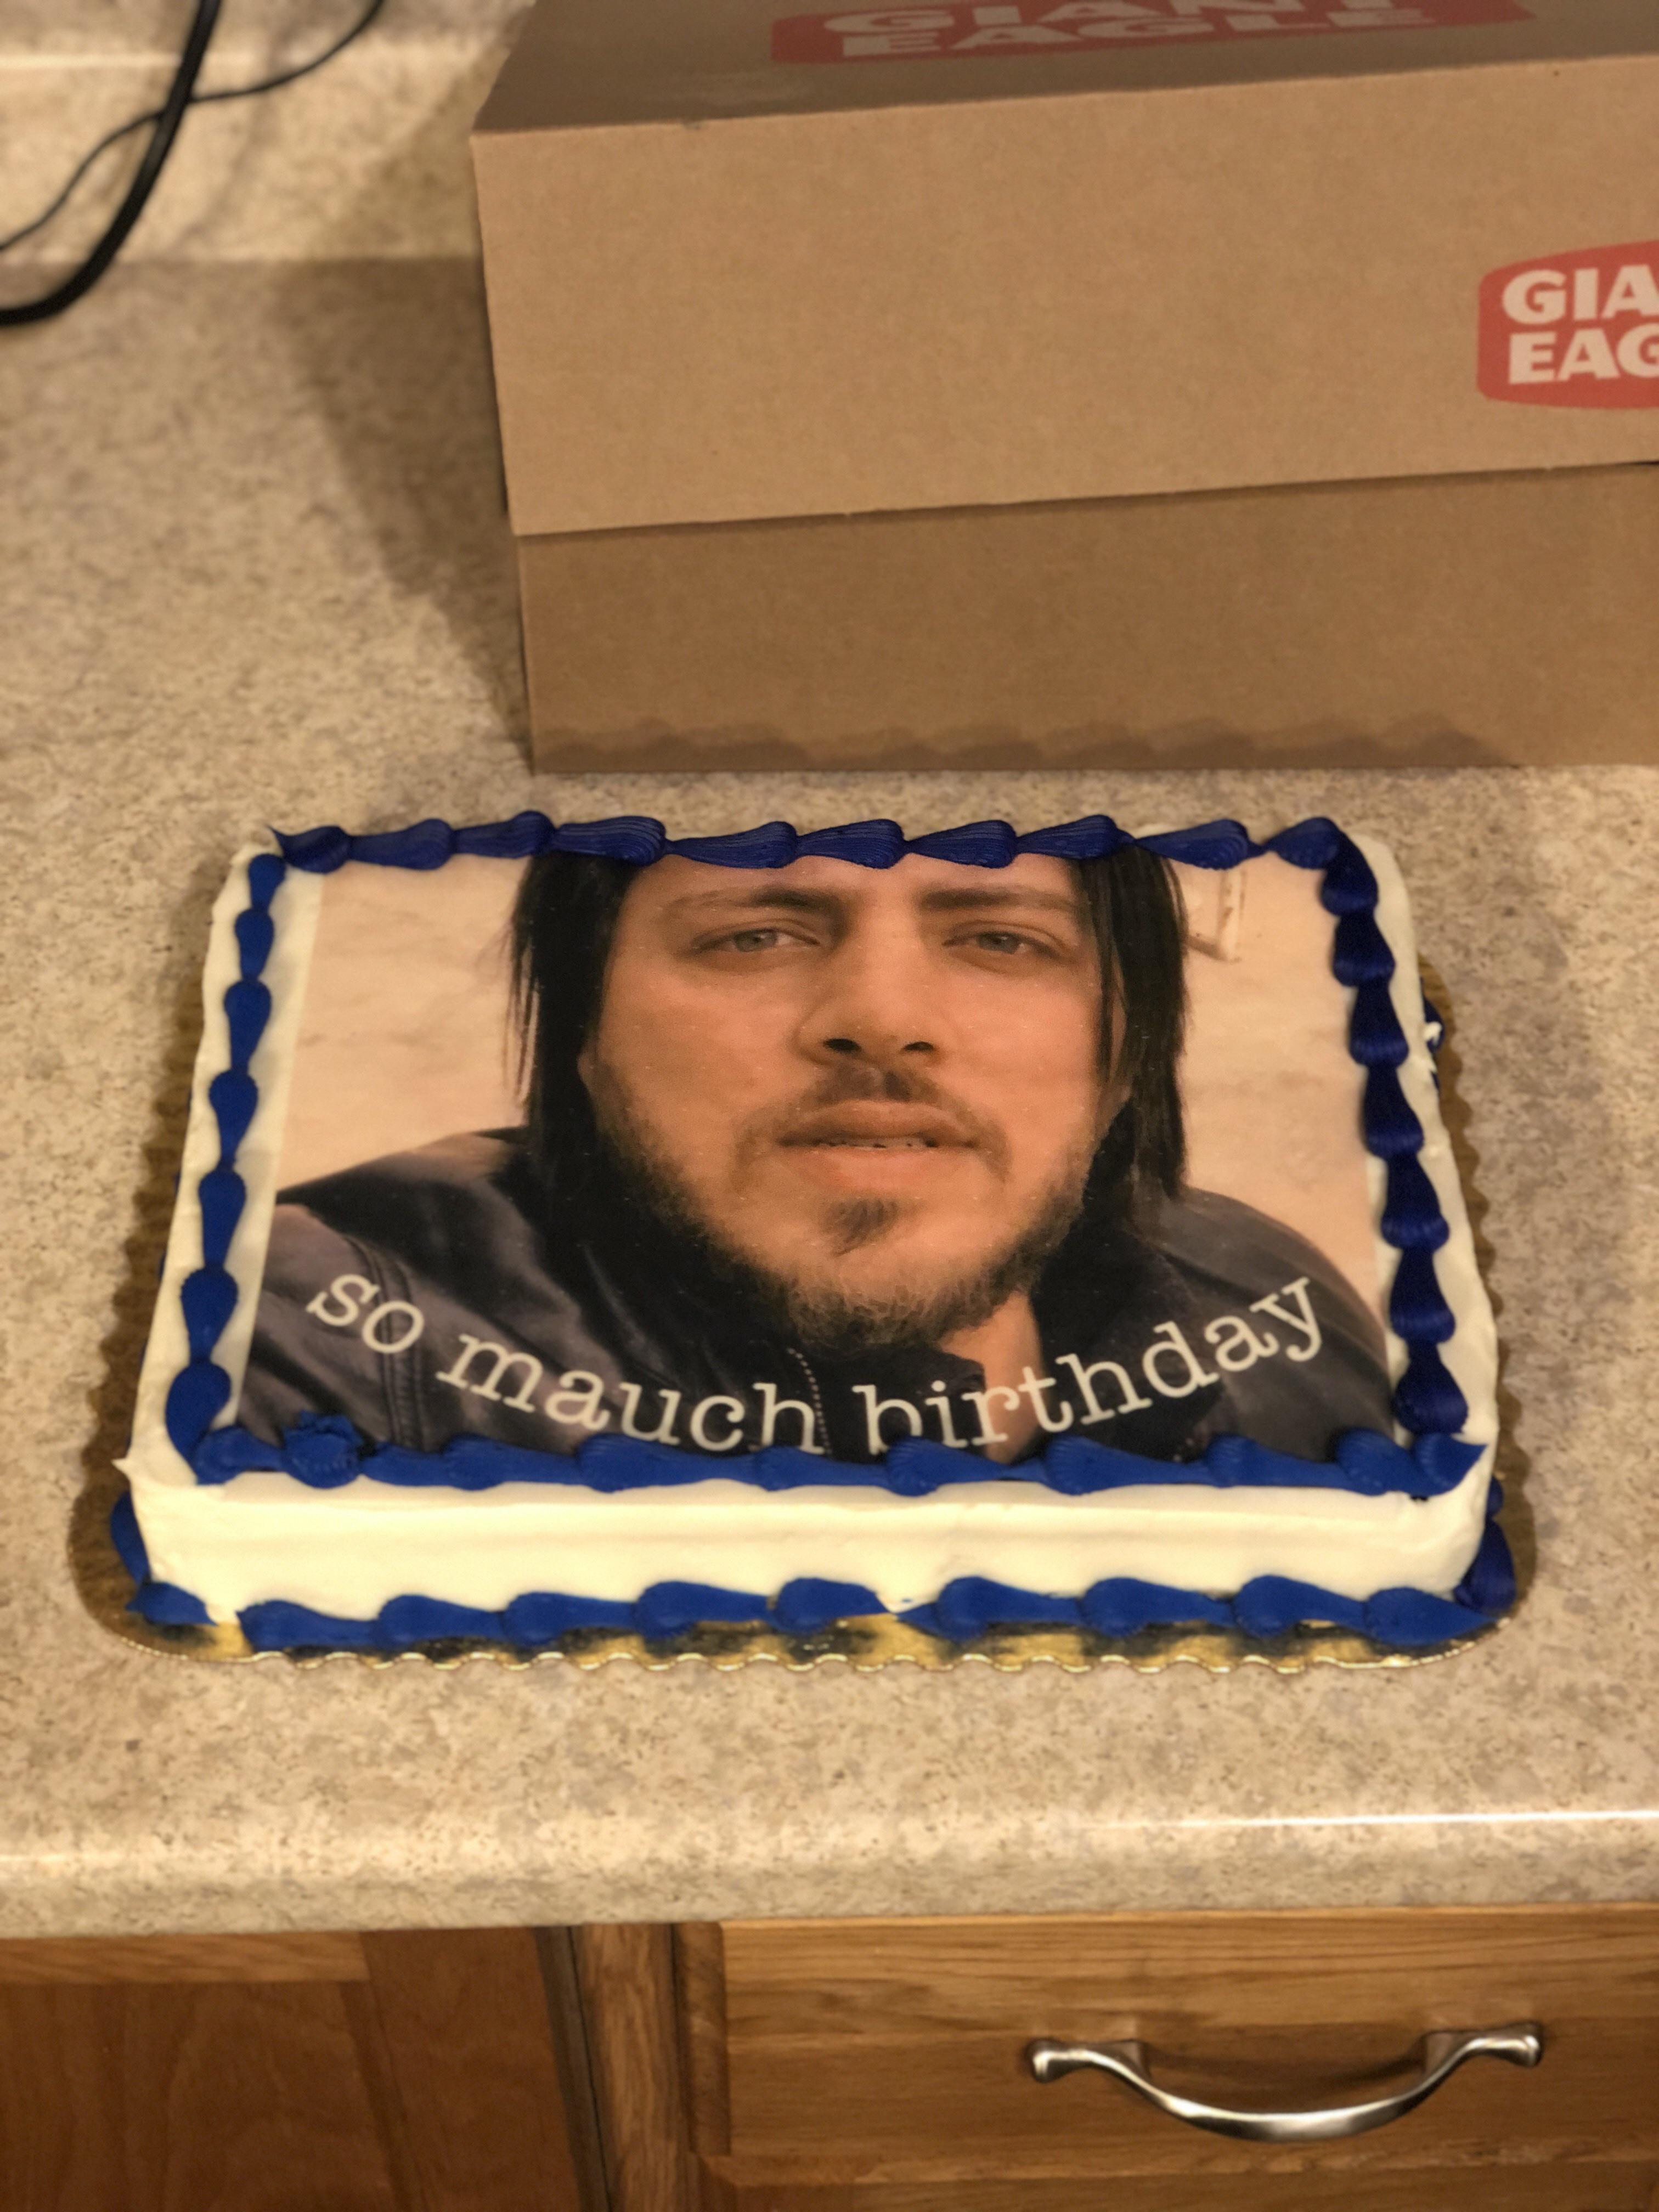 My Girlfriend Got My The Best Birthday Cake Ever Scrolller